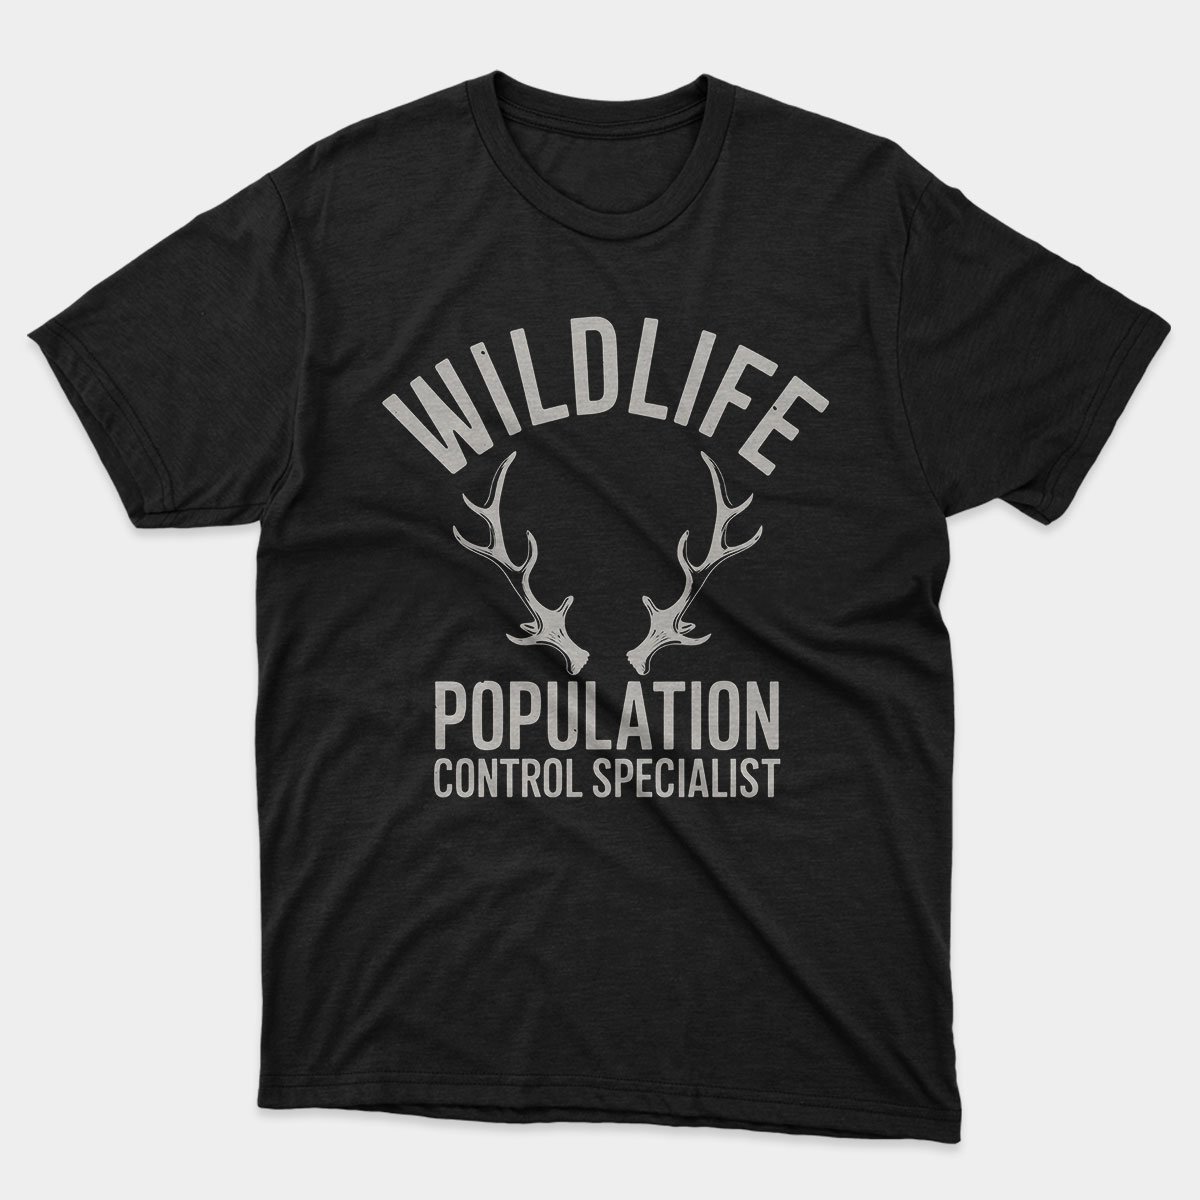 Wild Life Population Control Specialist T-shirt